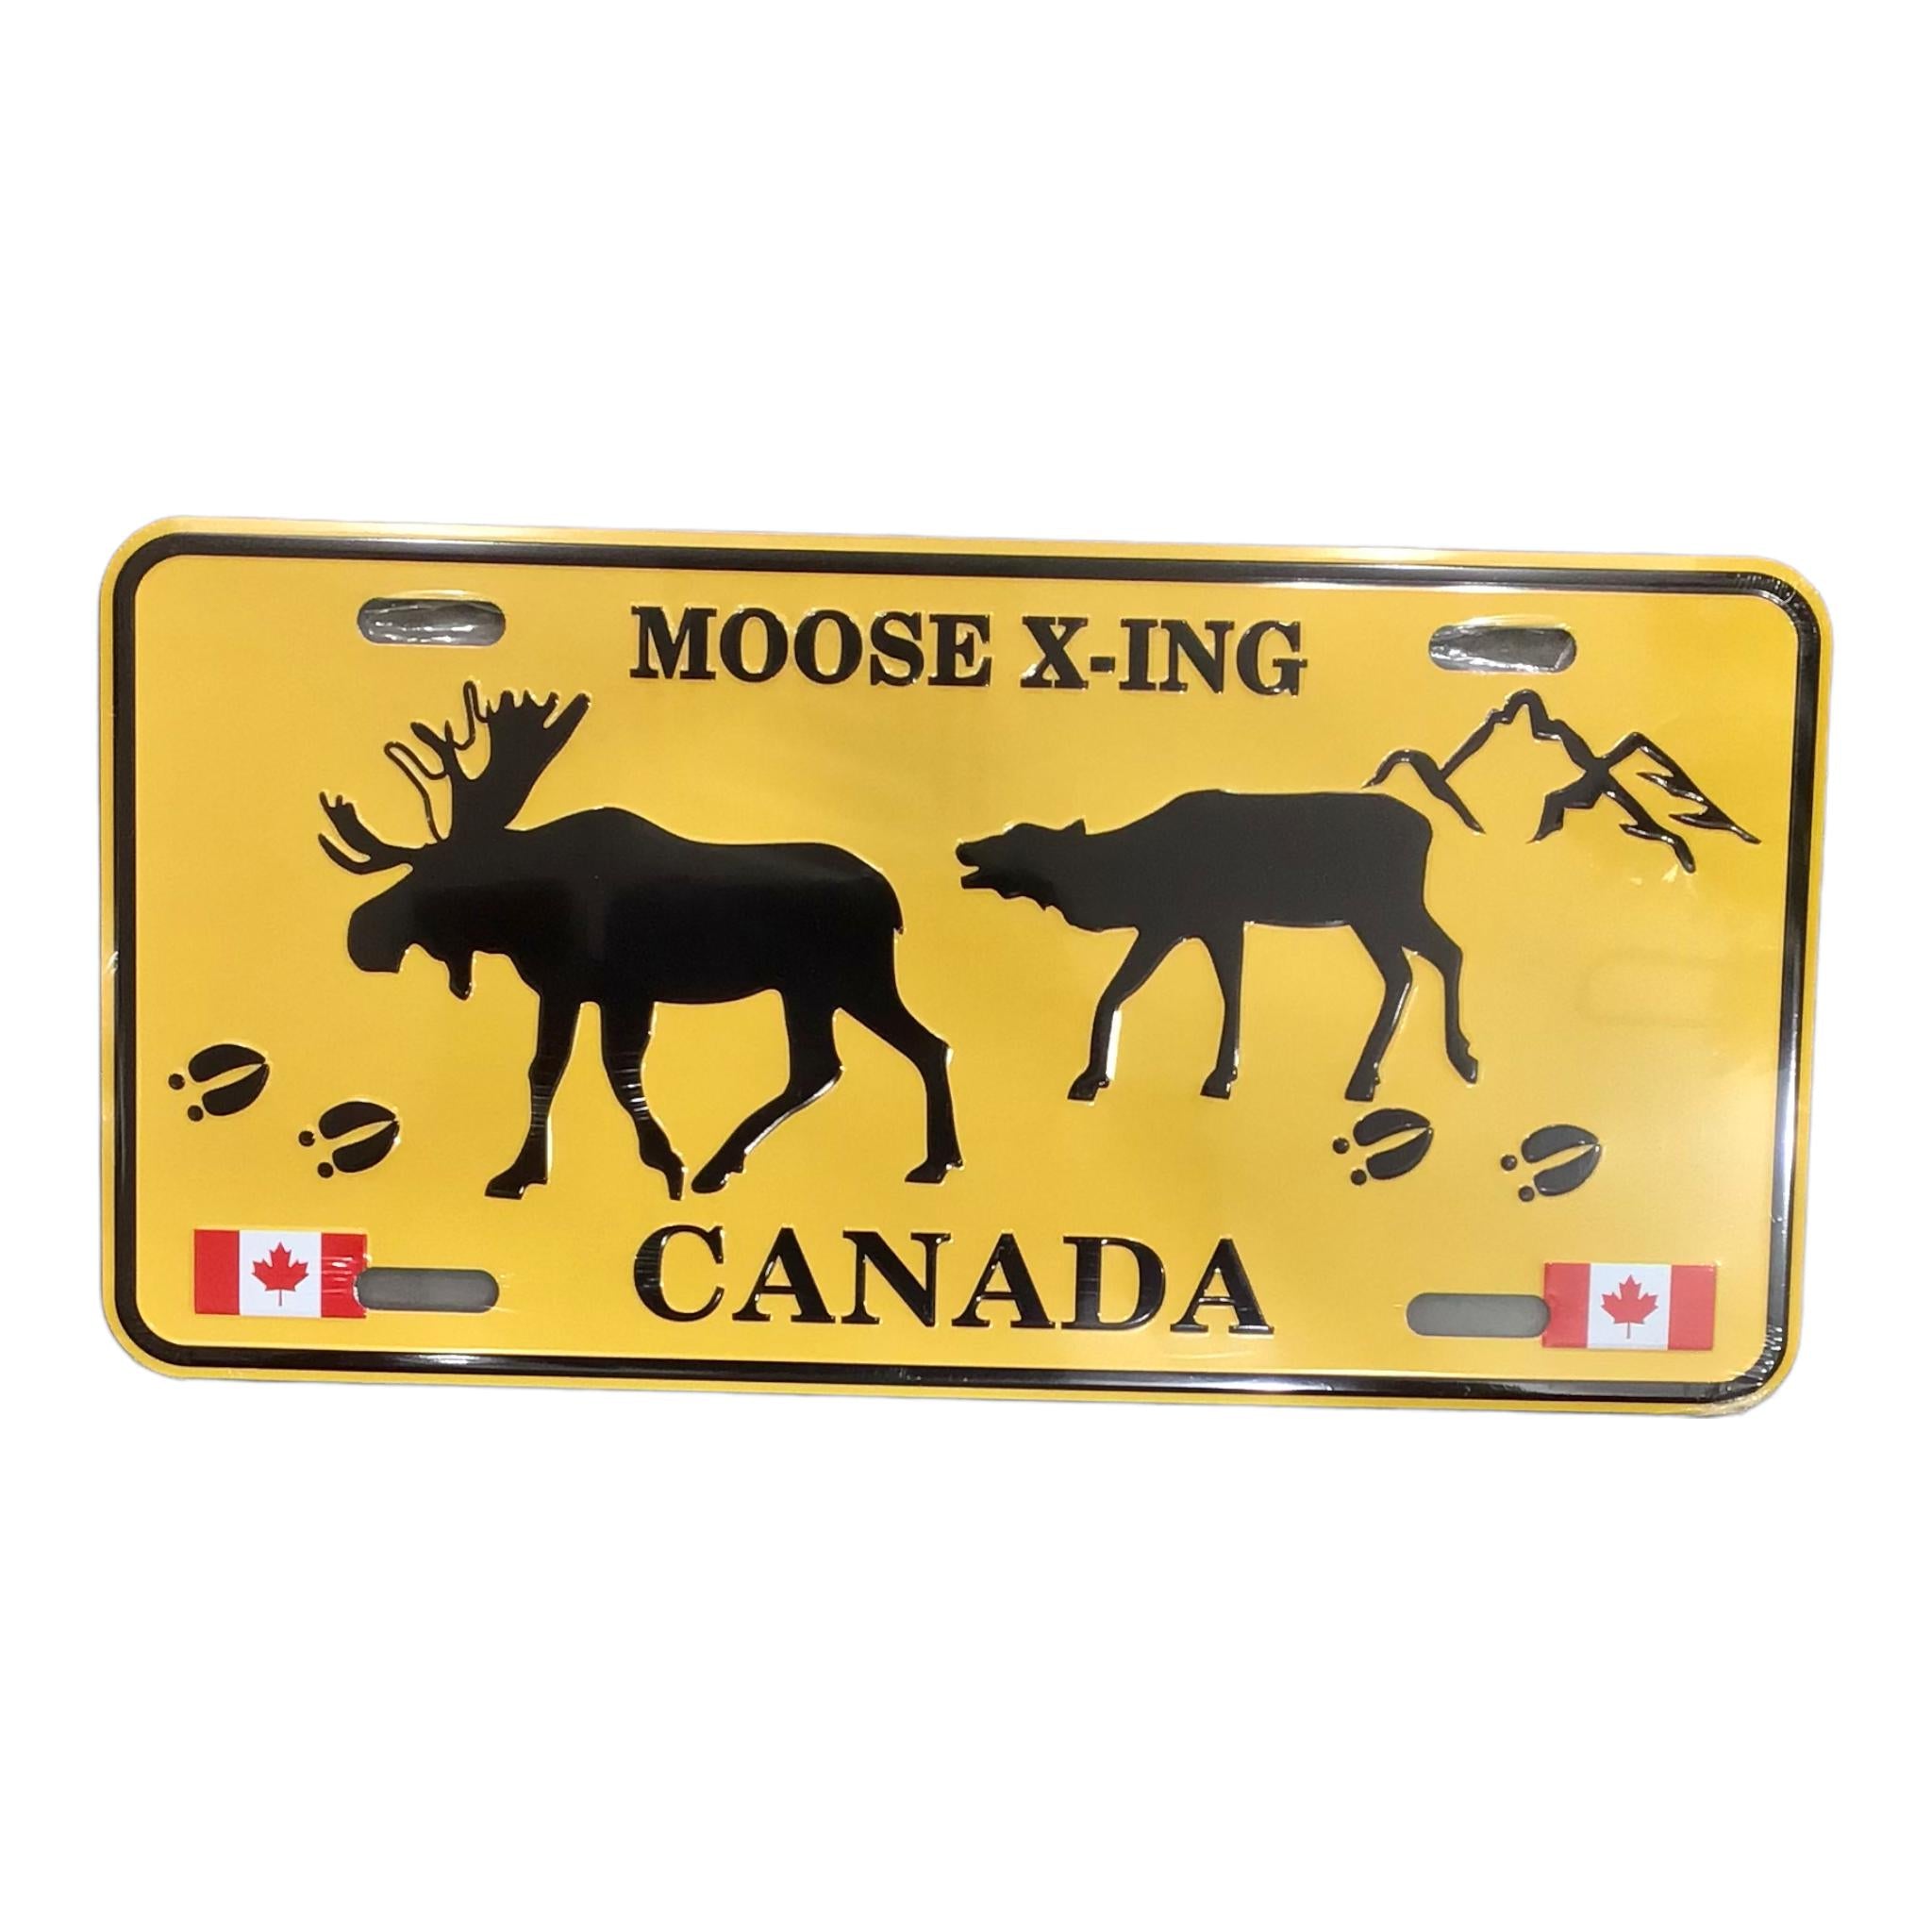 MOOSE X-ING CANADA LICENSE PLATE - SOUVENIR NOVELTY GIFT 30cm x 15cm